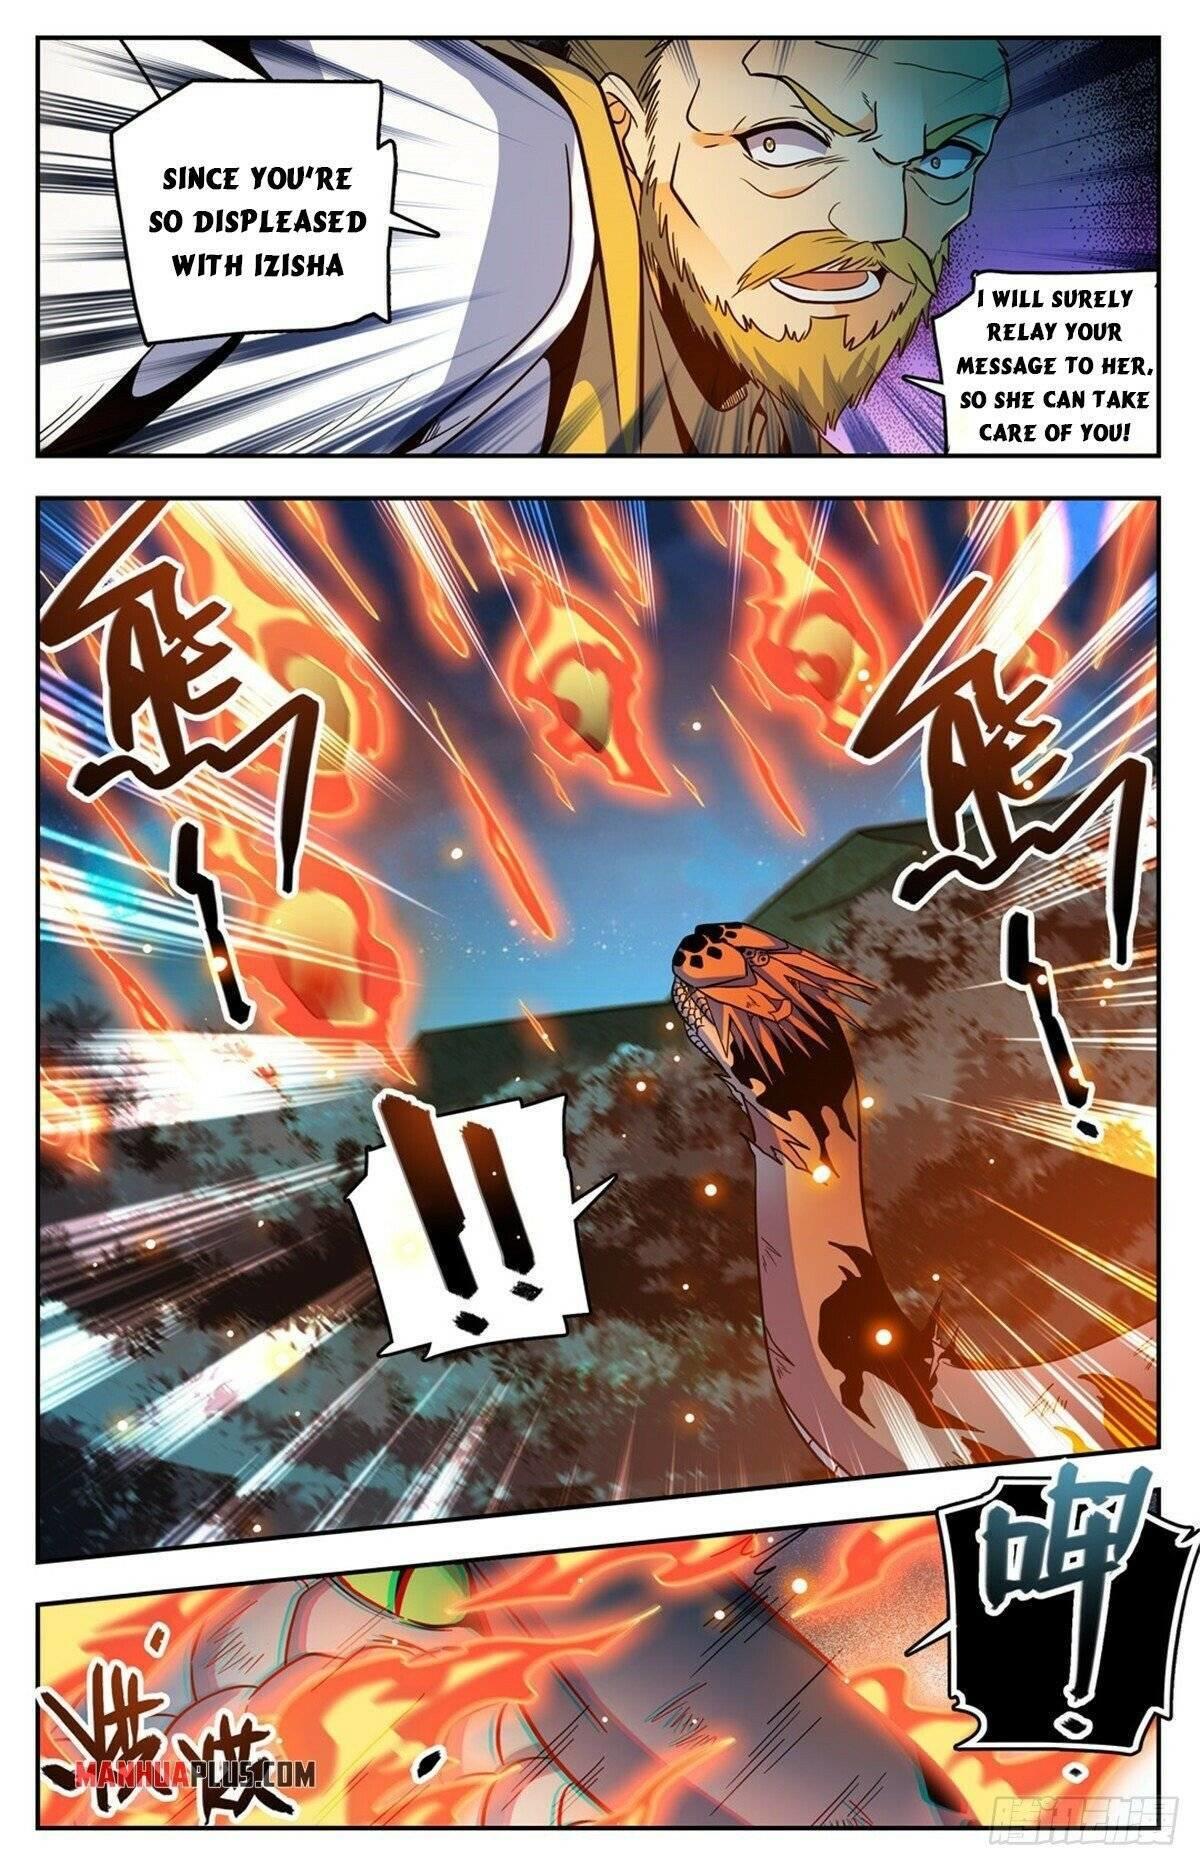 Versatile Mage Chapter 757 page 3 - Mangakakalot